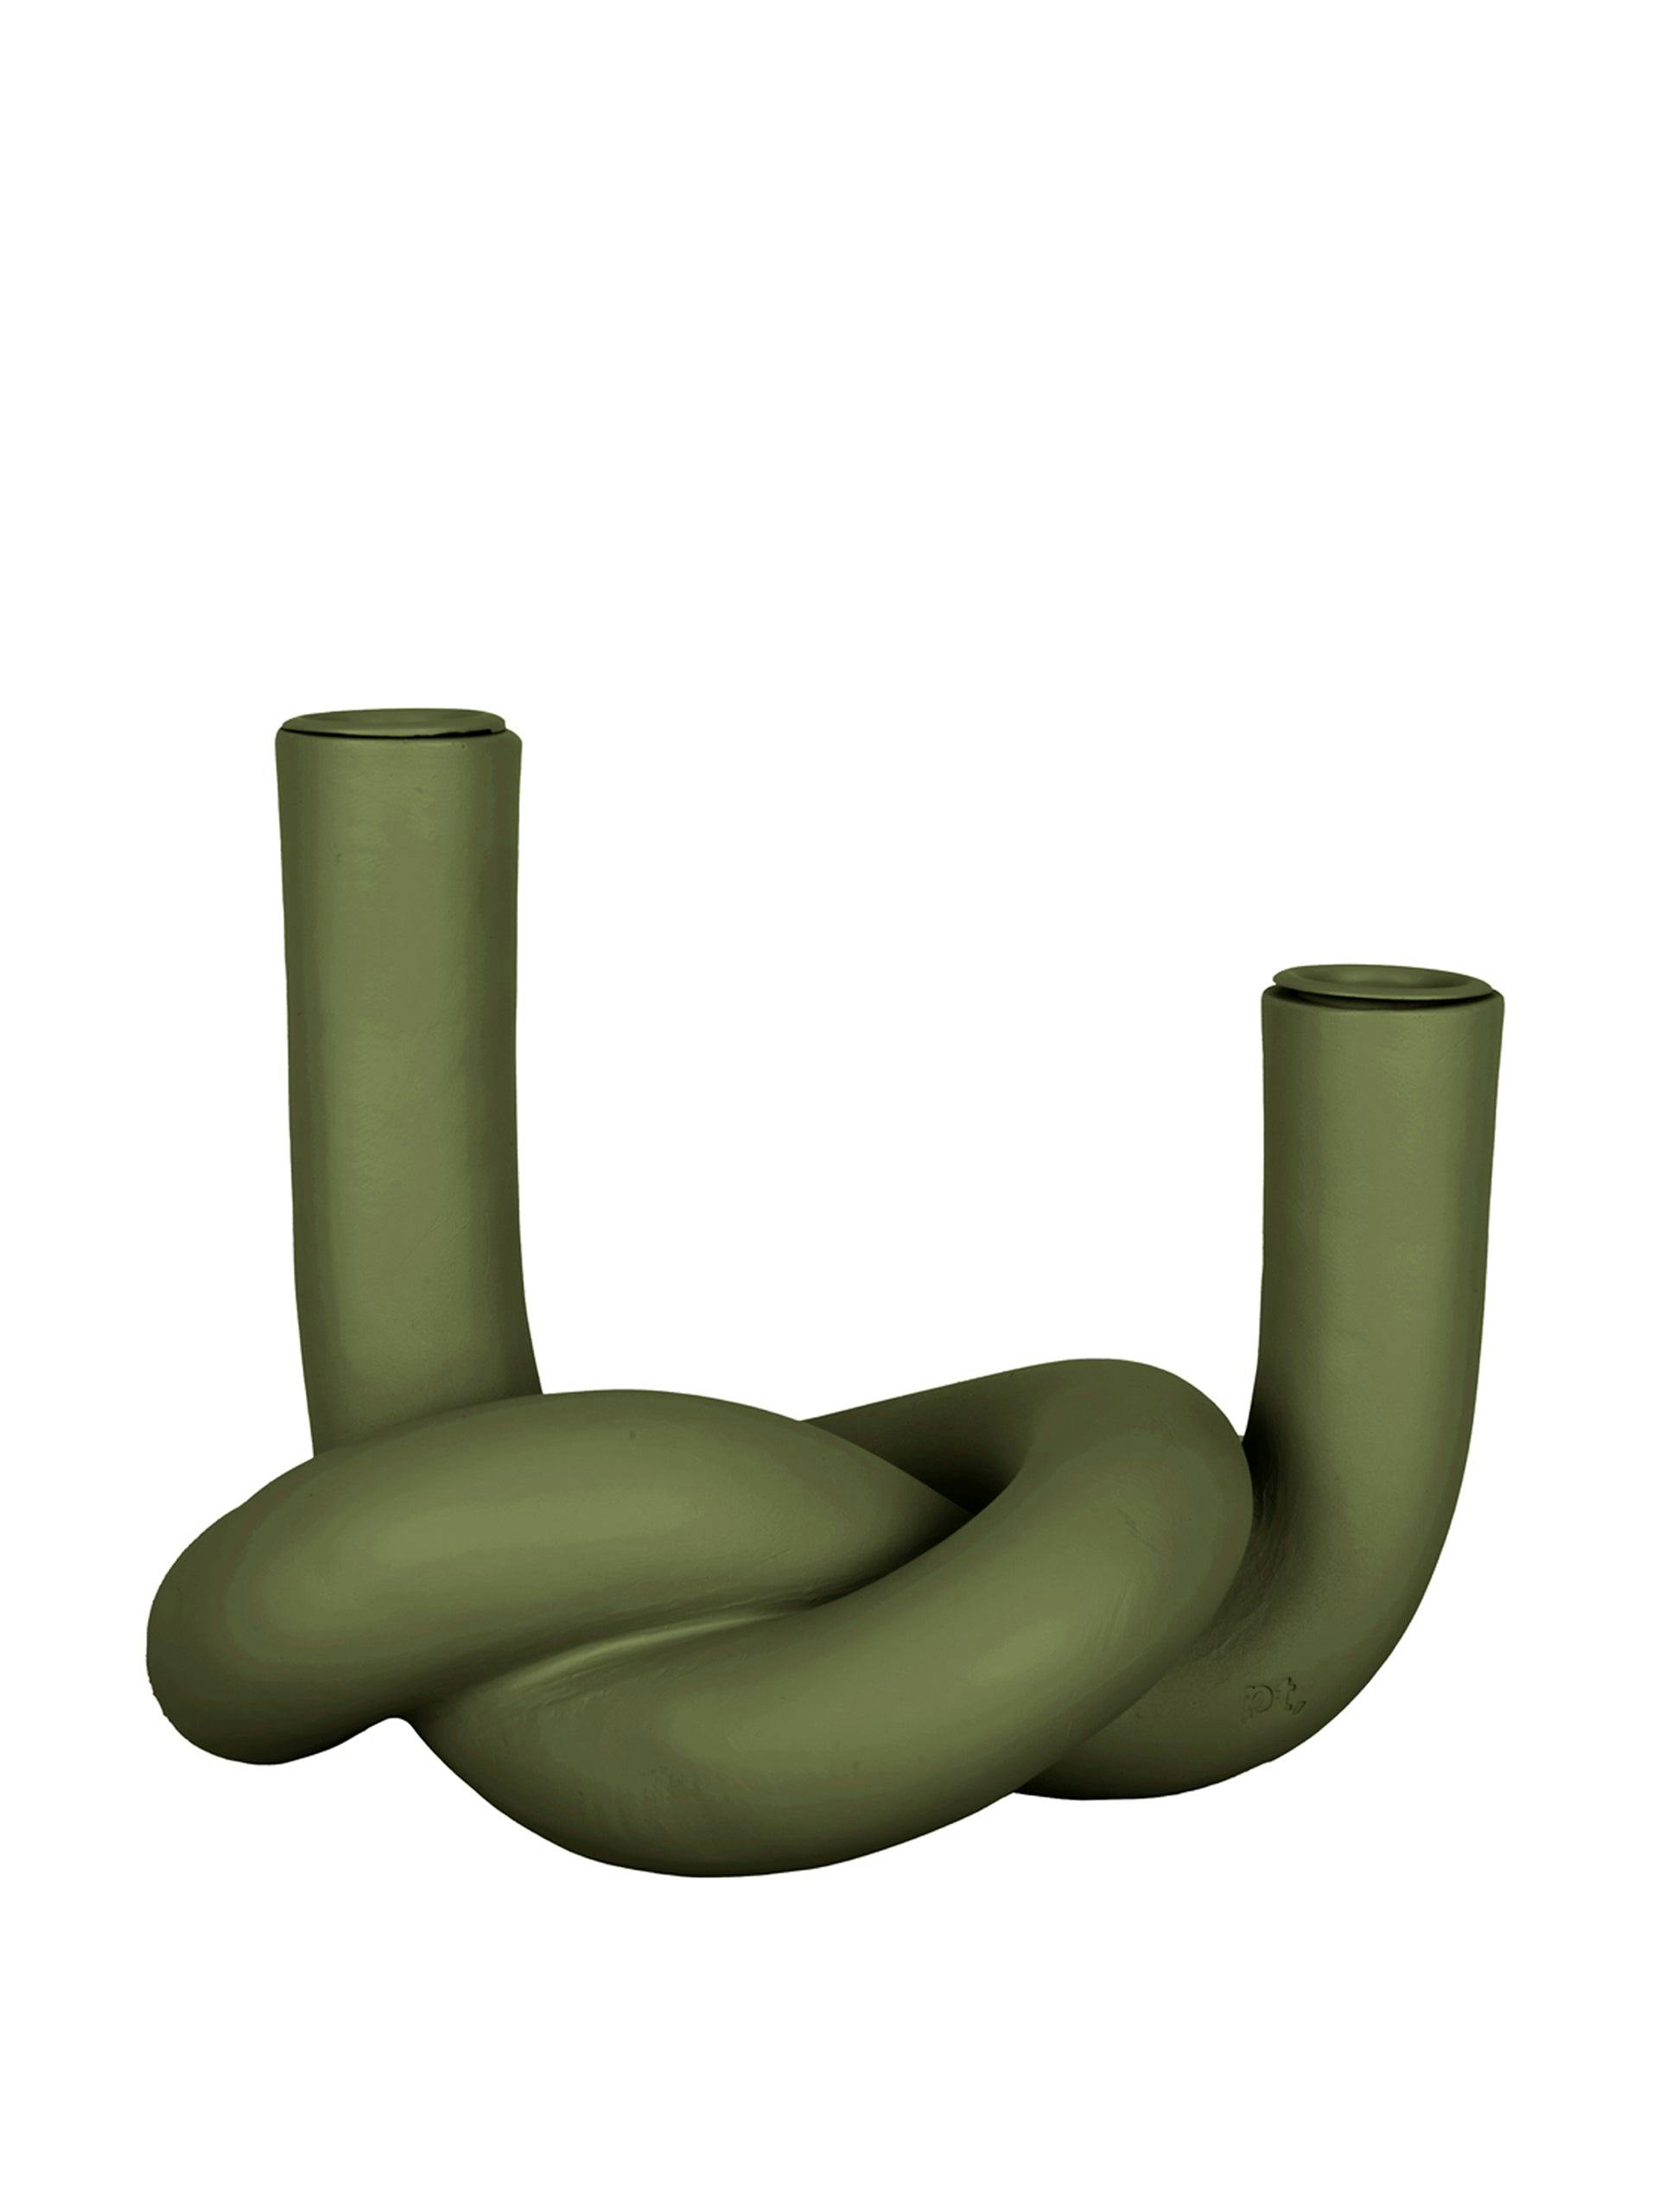 Green knot sculpture/ candle holder